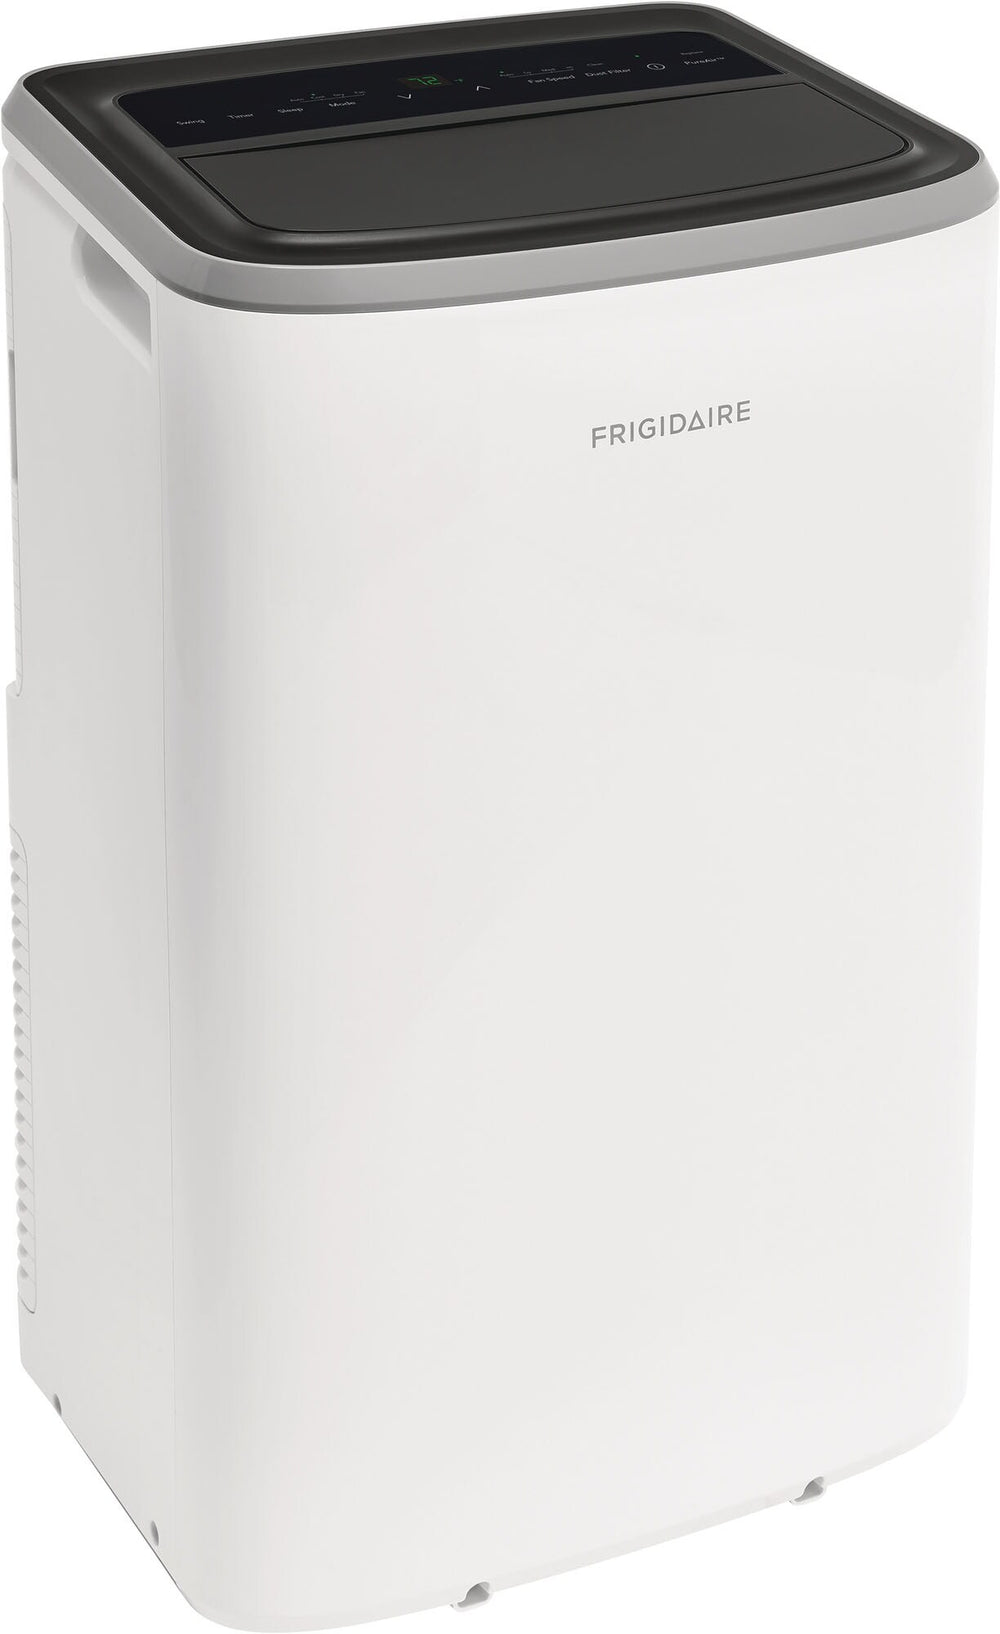 Frigidaire - 3-in-1 Portable Room Air Conditioner - White_1